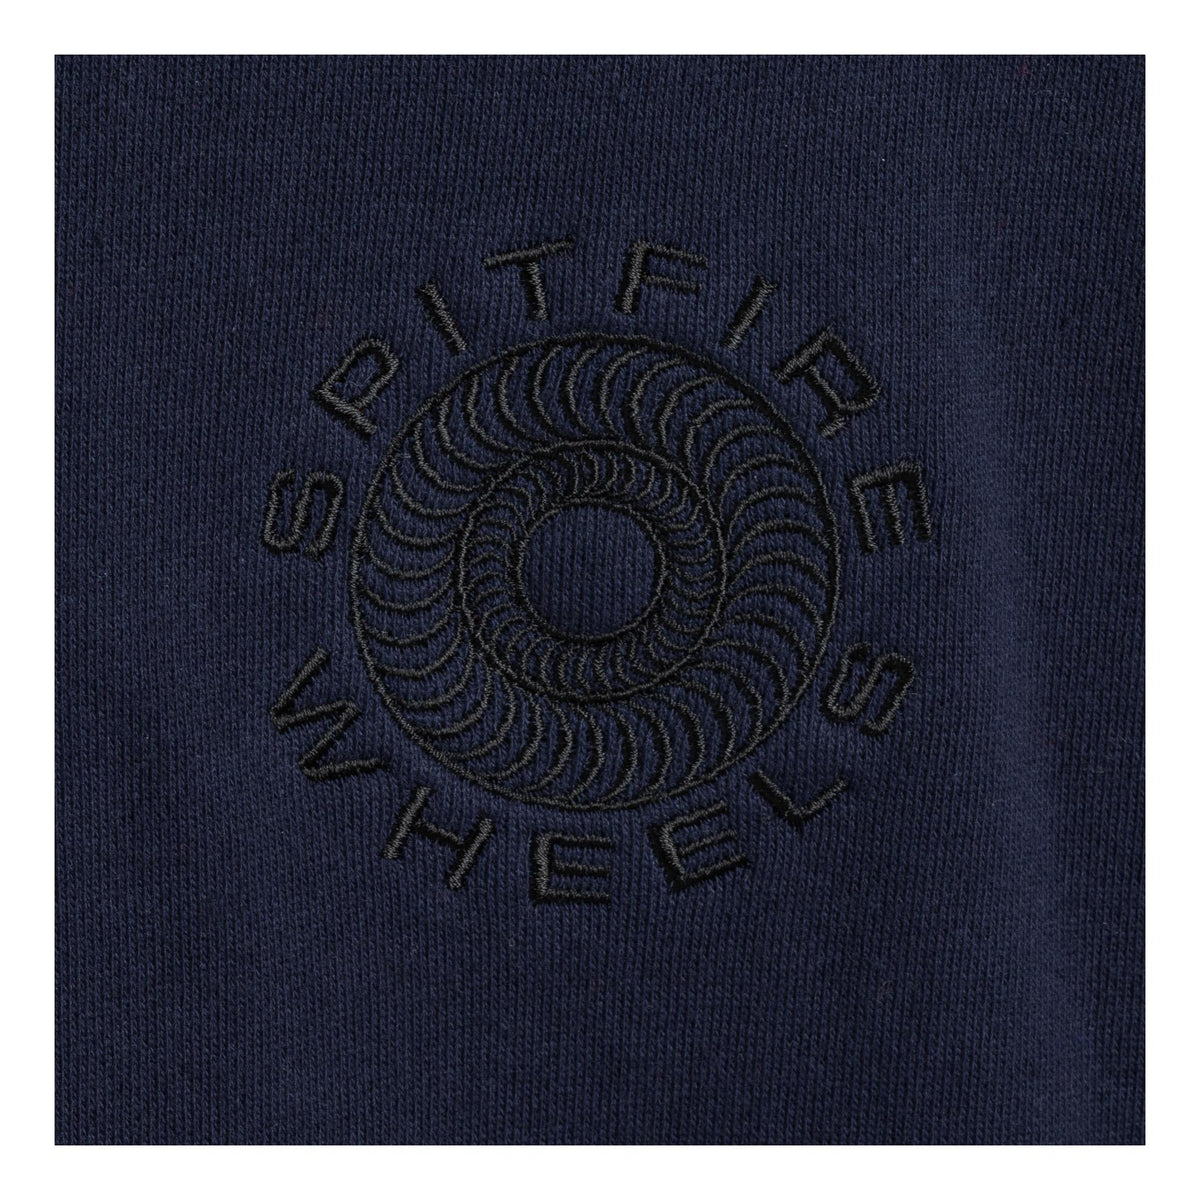 Spitfire Crew Classic 87 Swirl Embroidery Navy/Black - Venue Skateboards